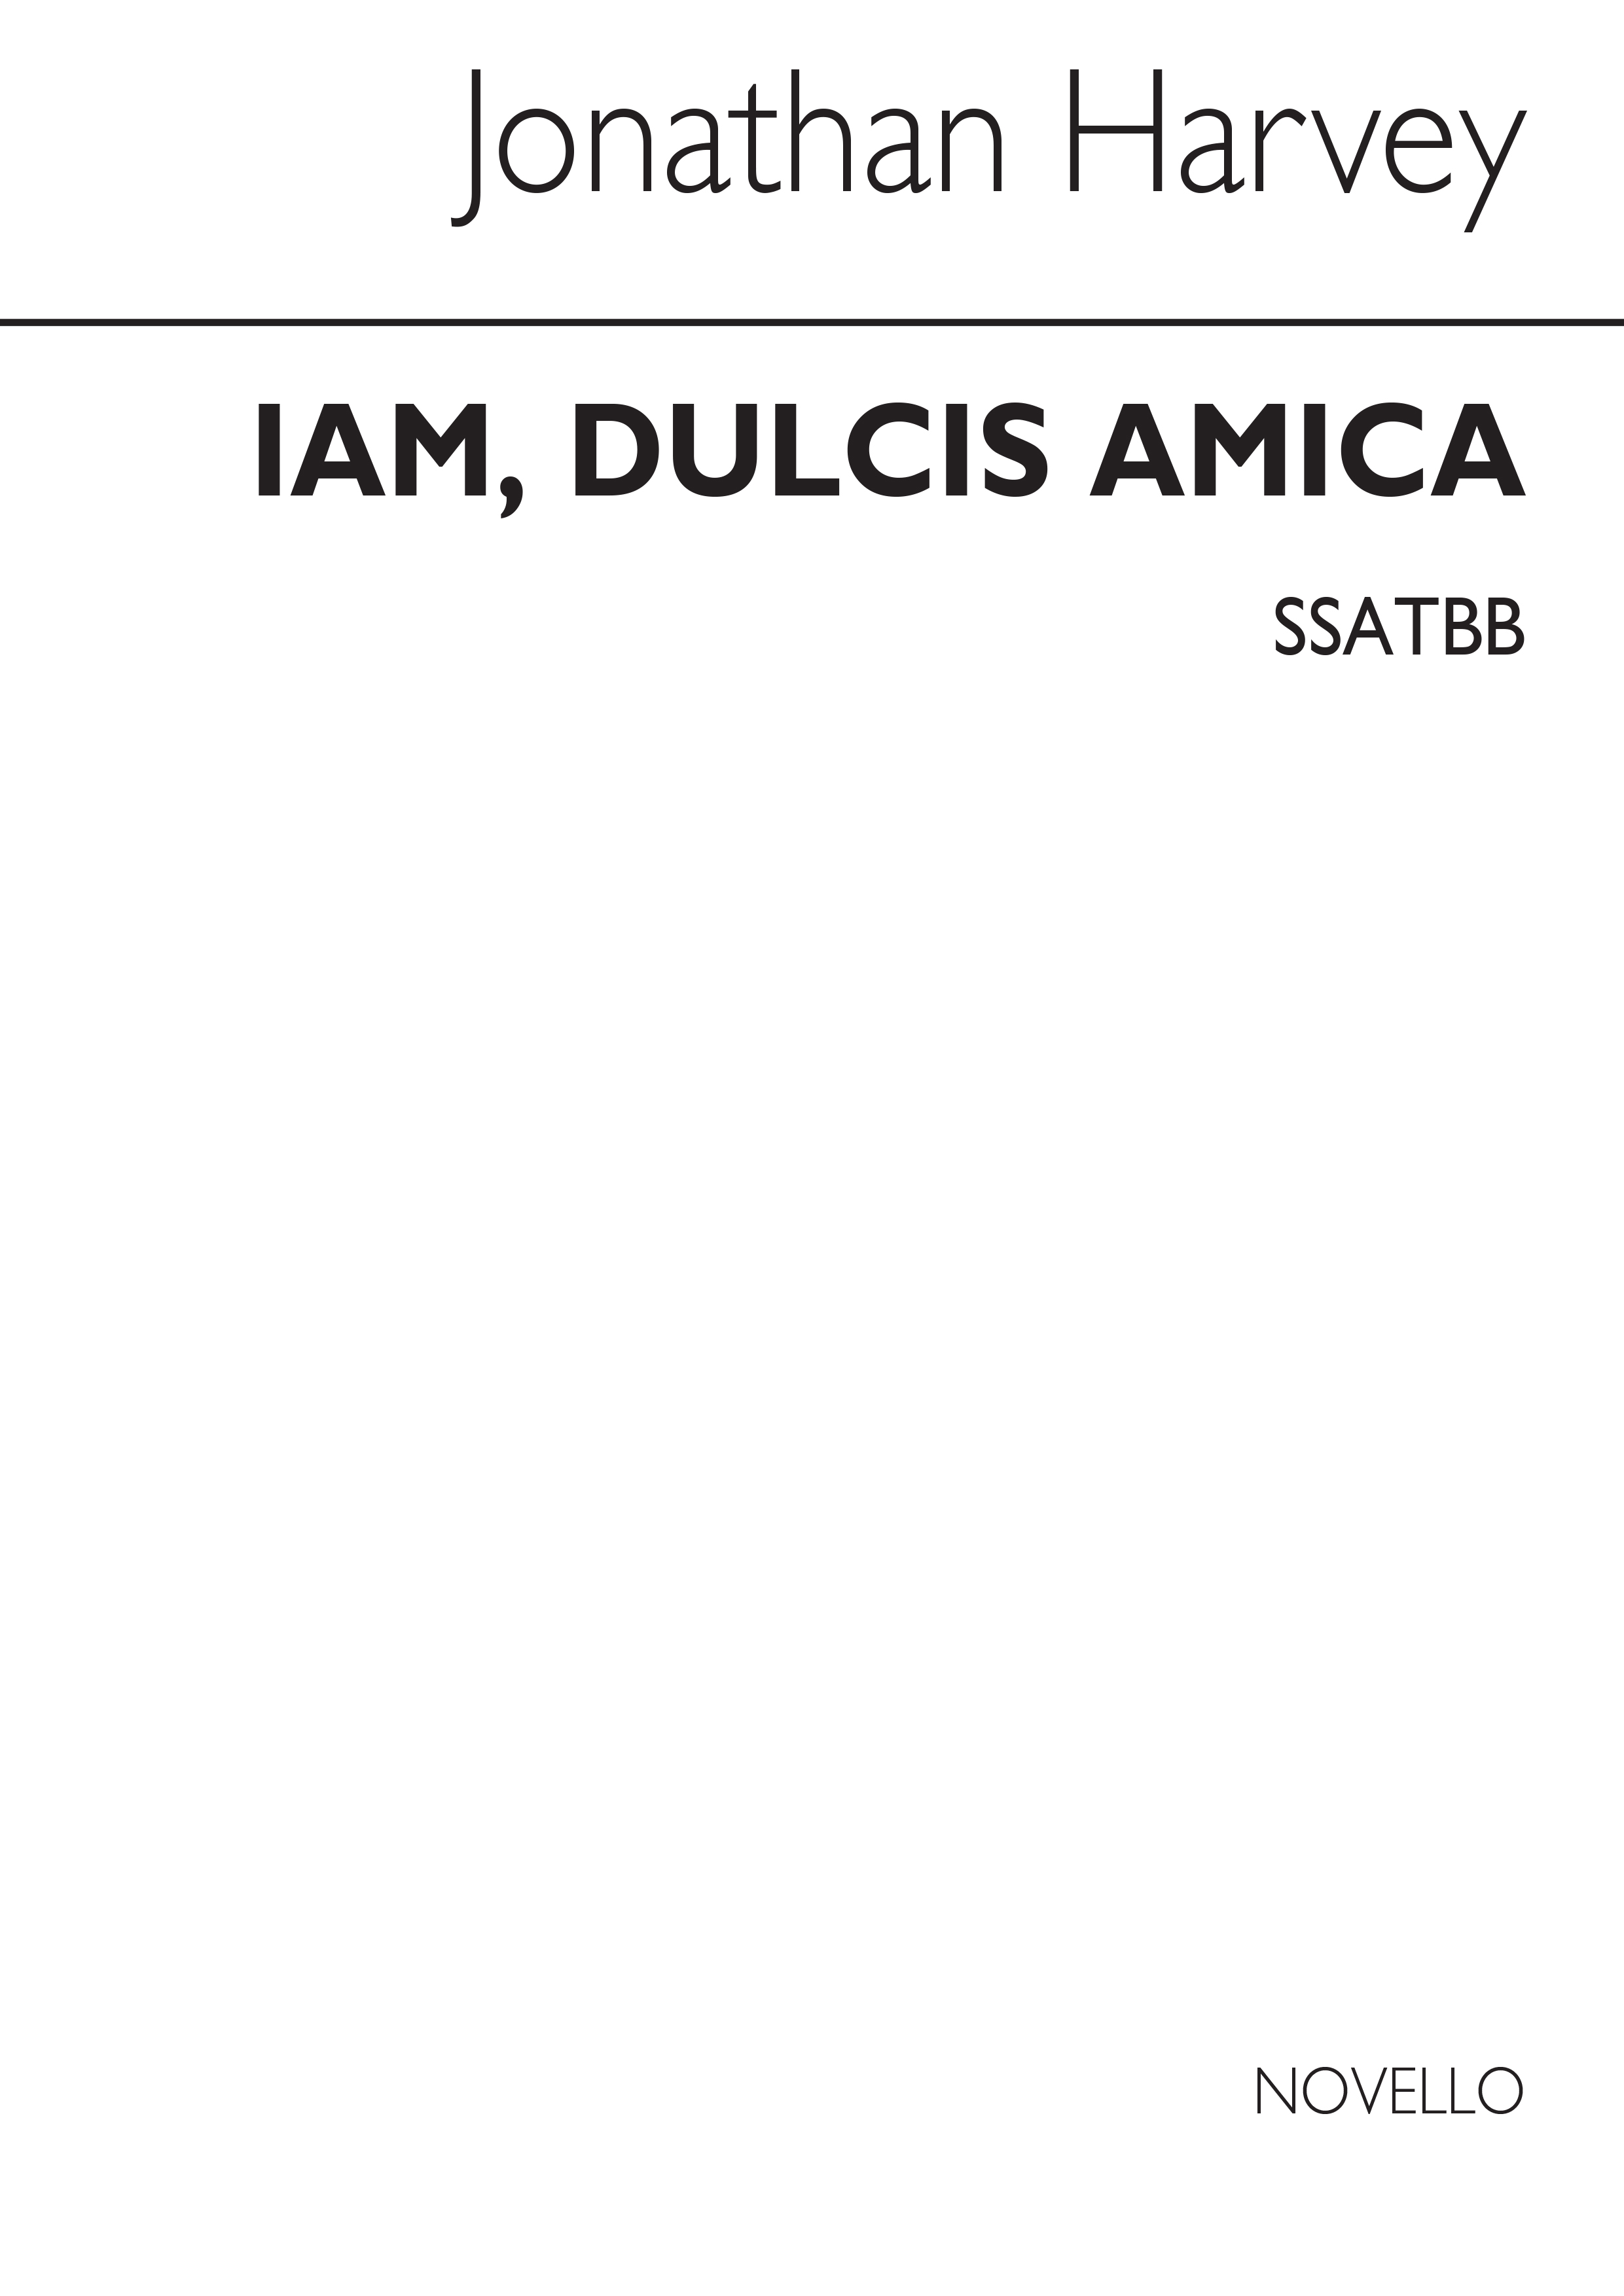 Jonathan Harvey: Iam, Dulcis Amica for SSATBB Chorus